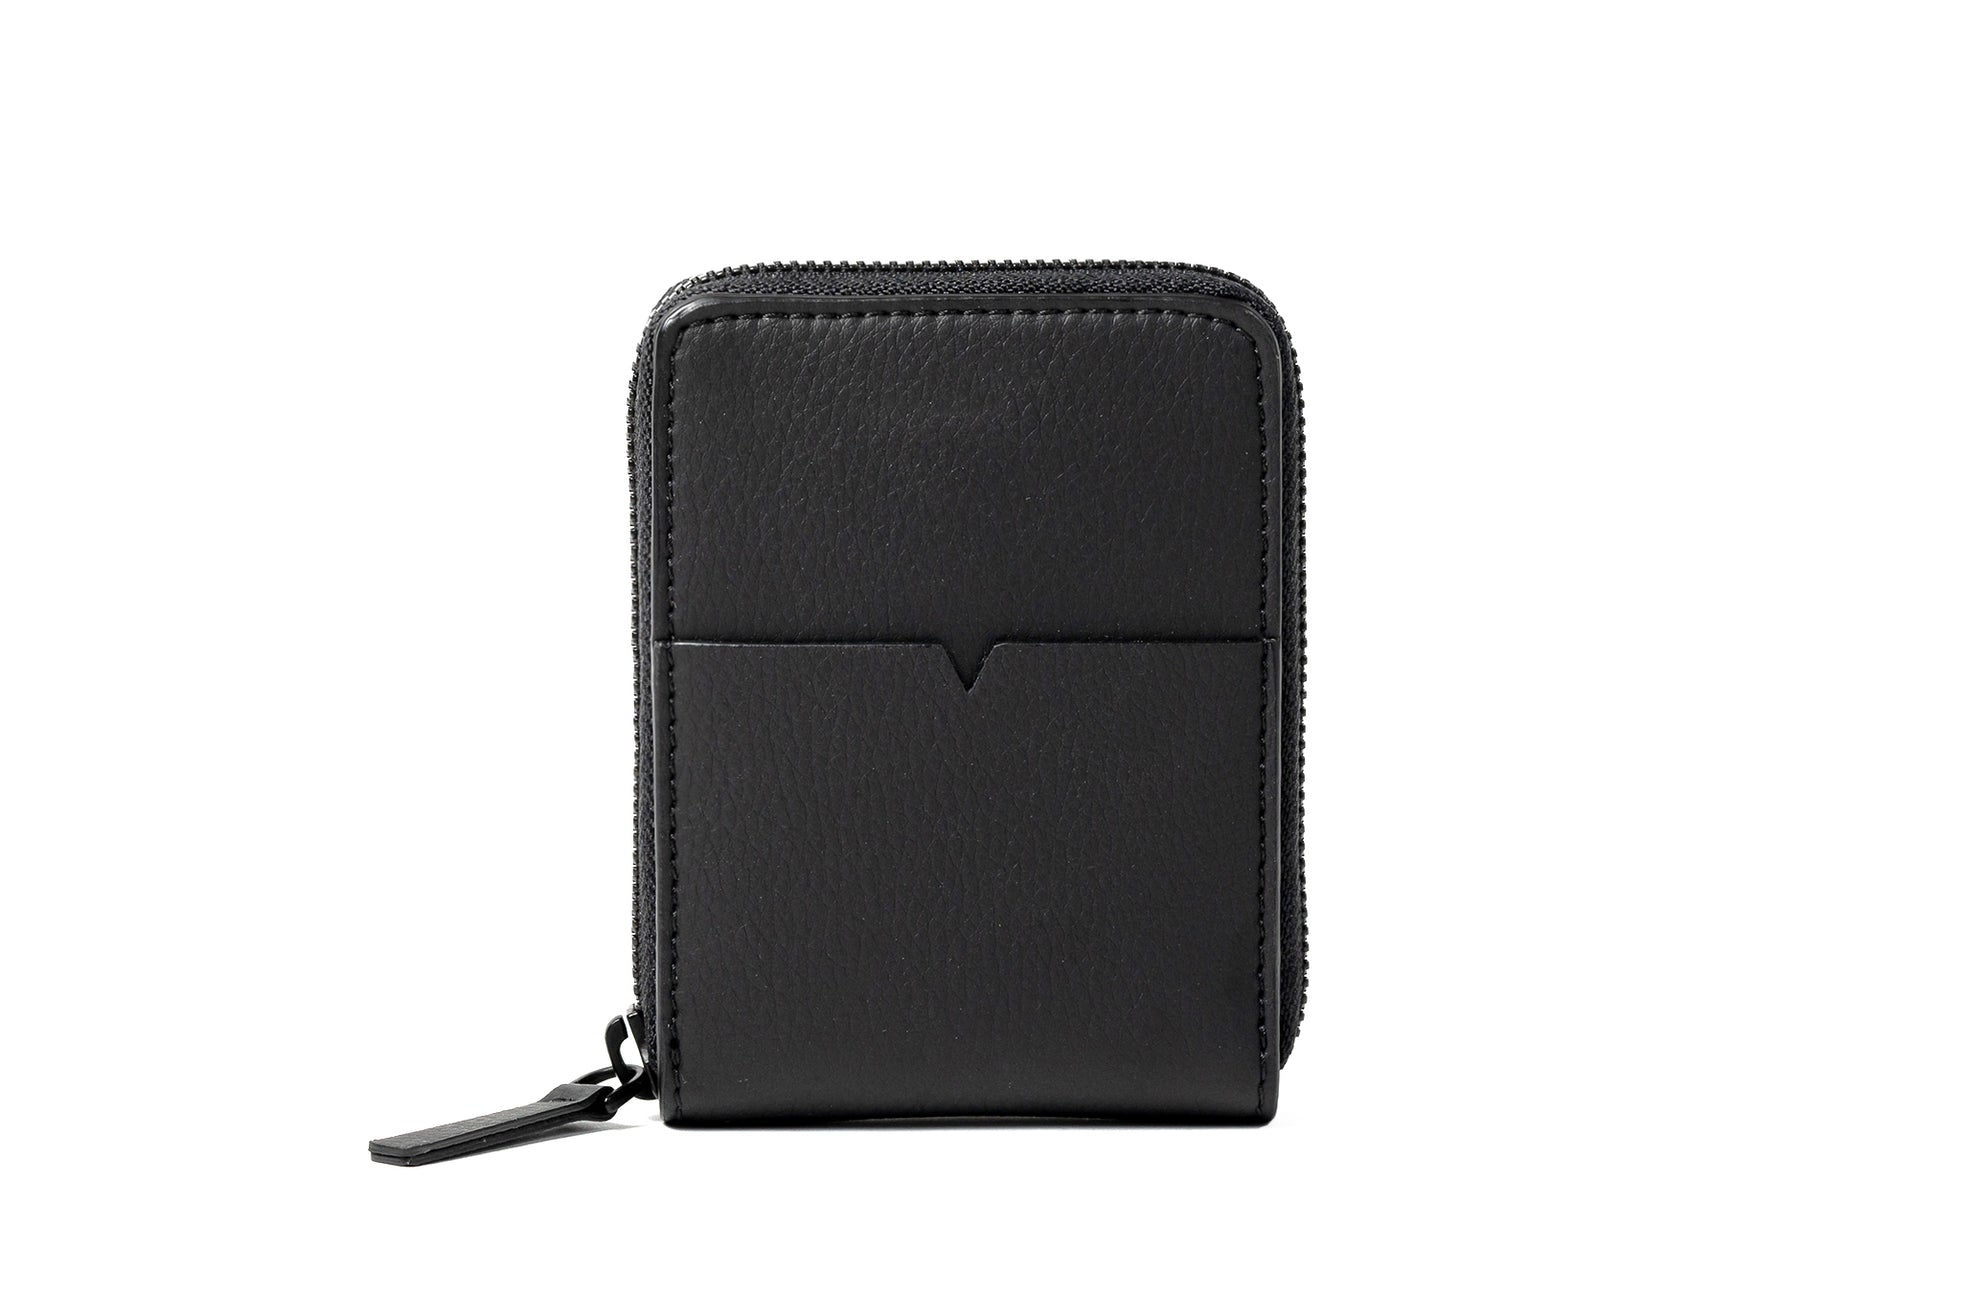 The Zip-Around Wallet - Sample Sale in Technik in Black image 1